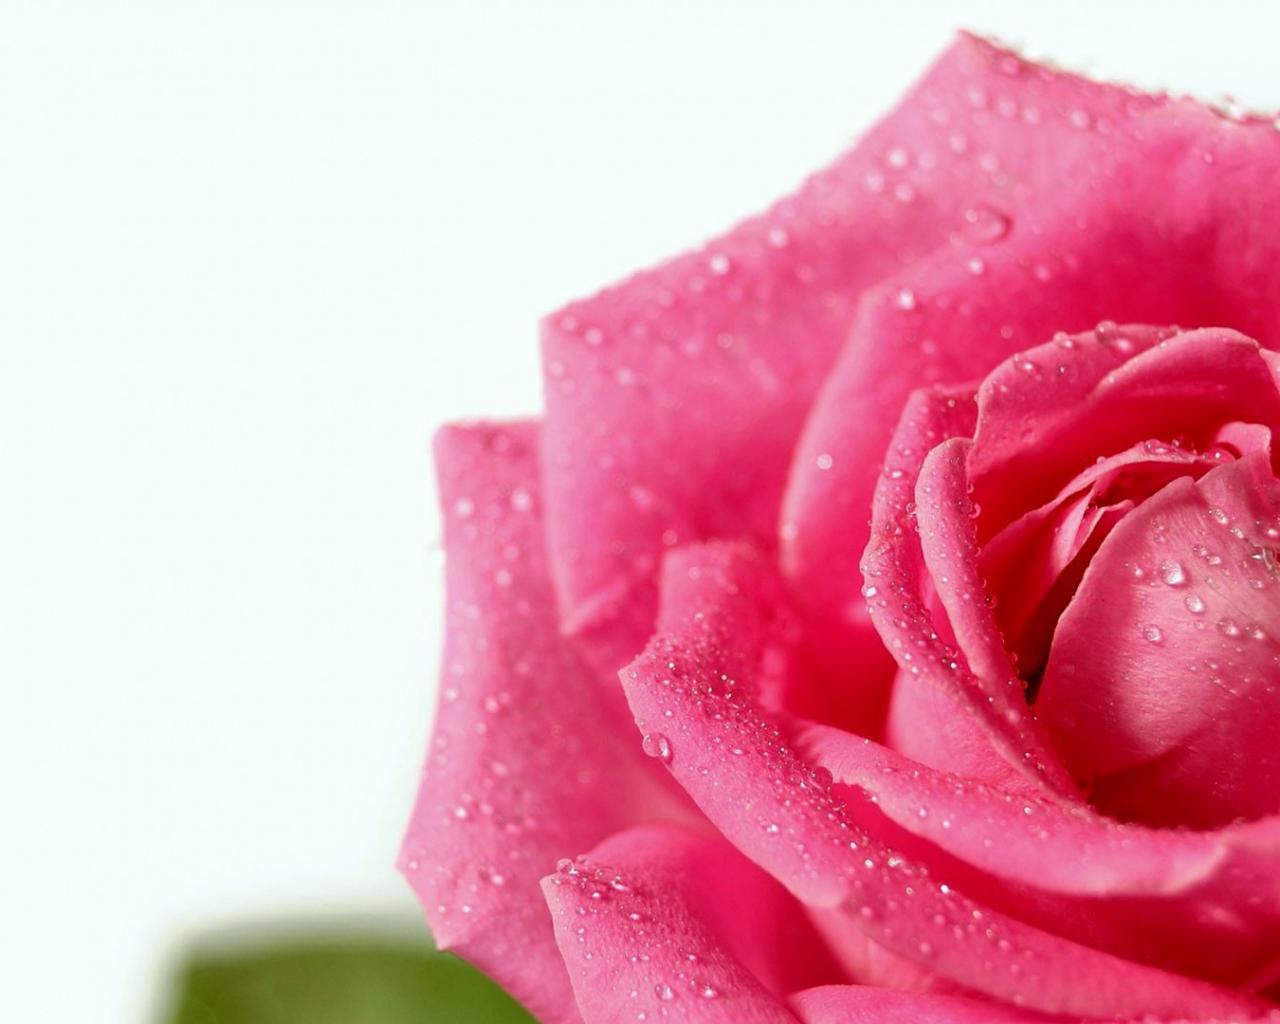 Dew drops on a scarlet rose 1280x1024